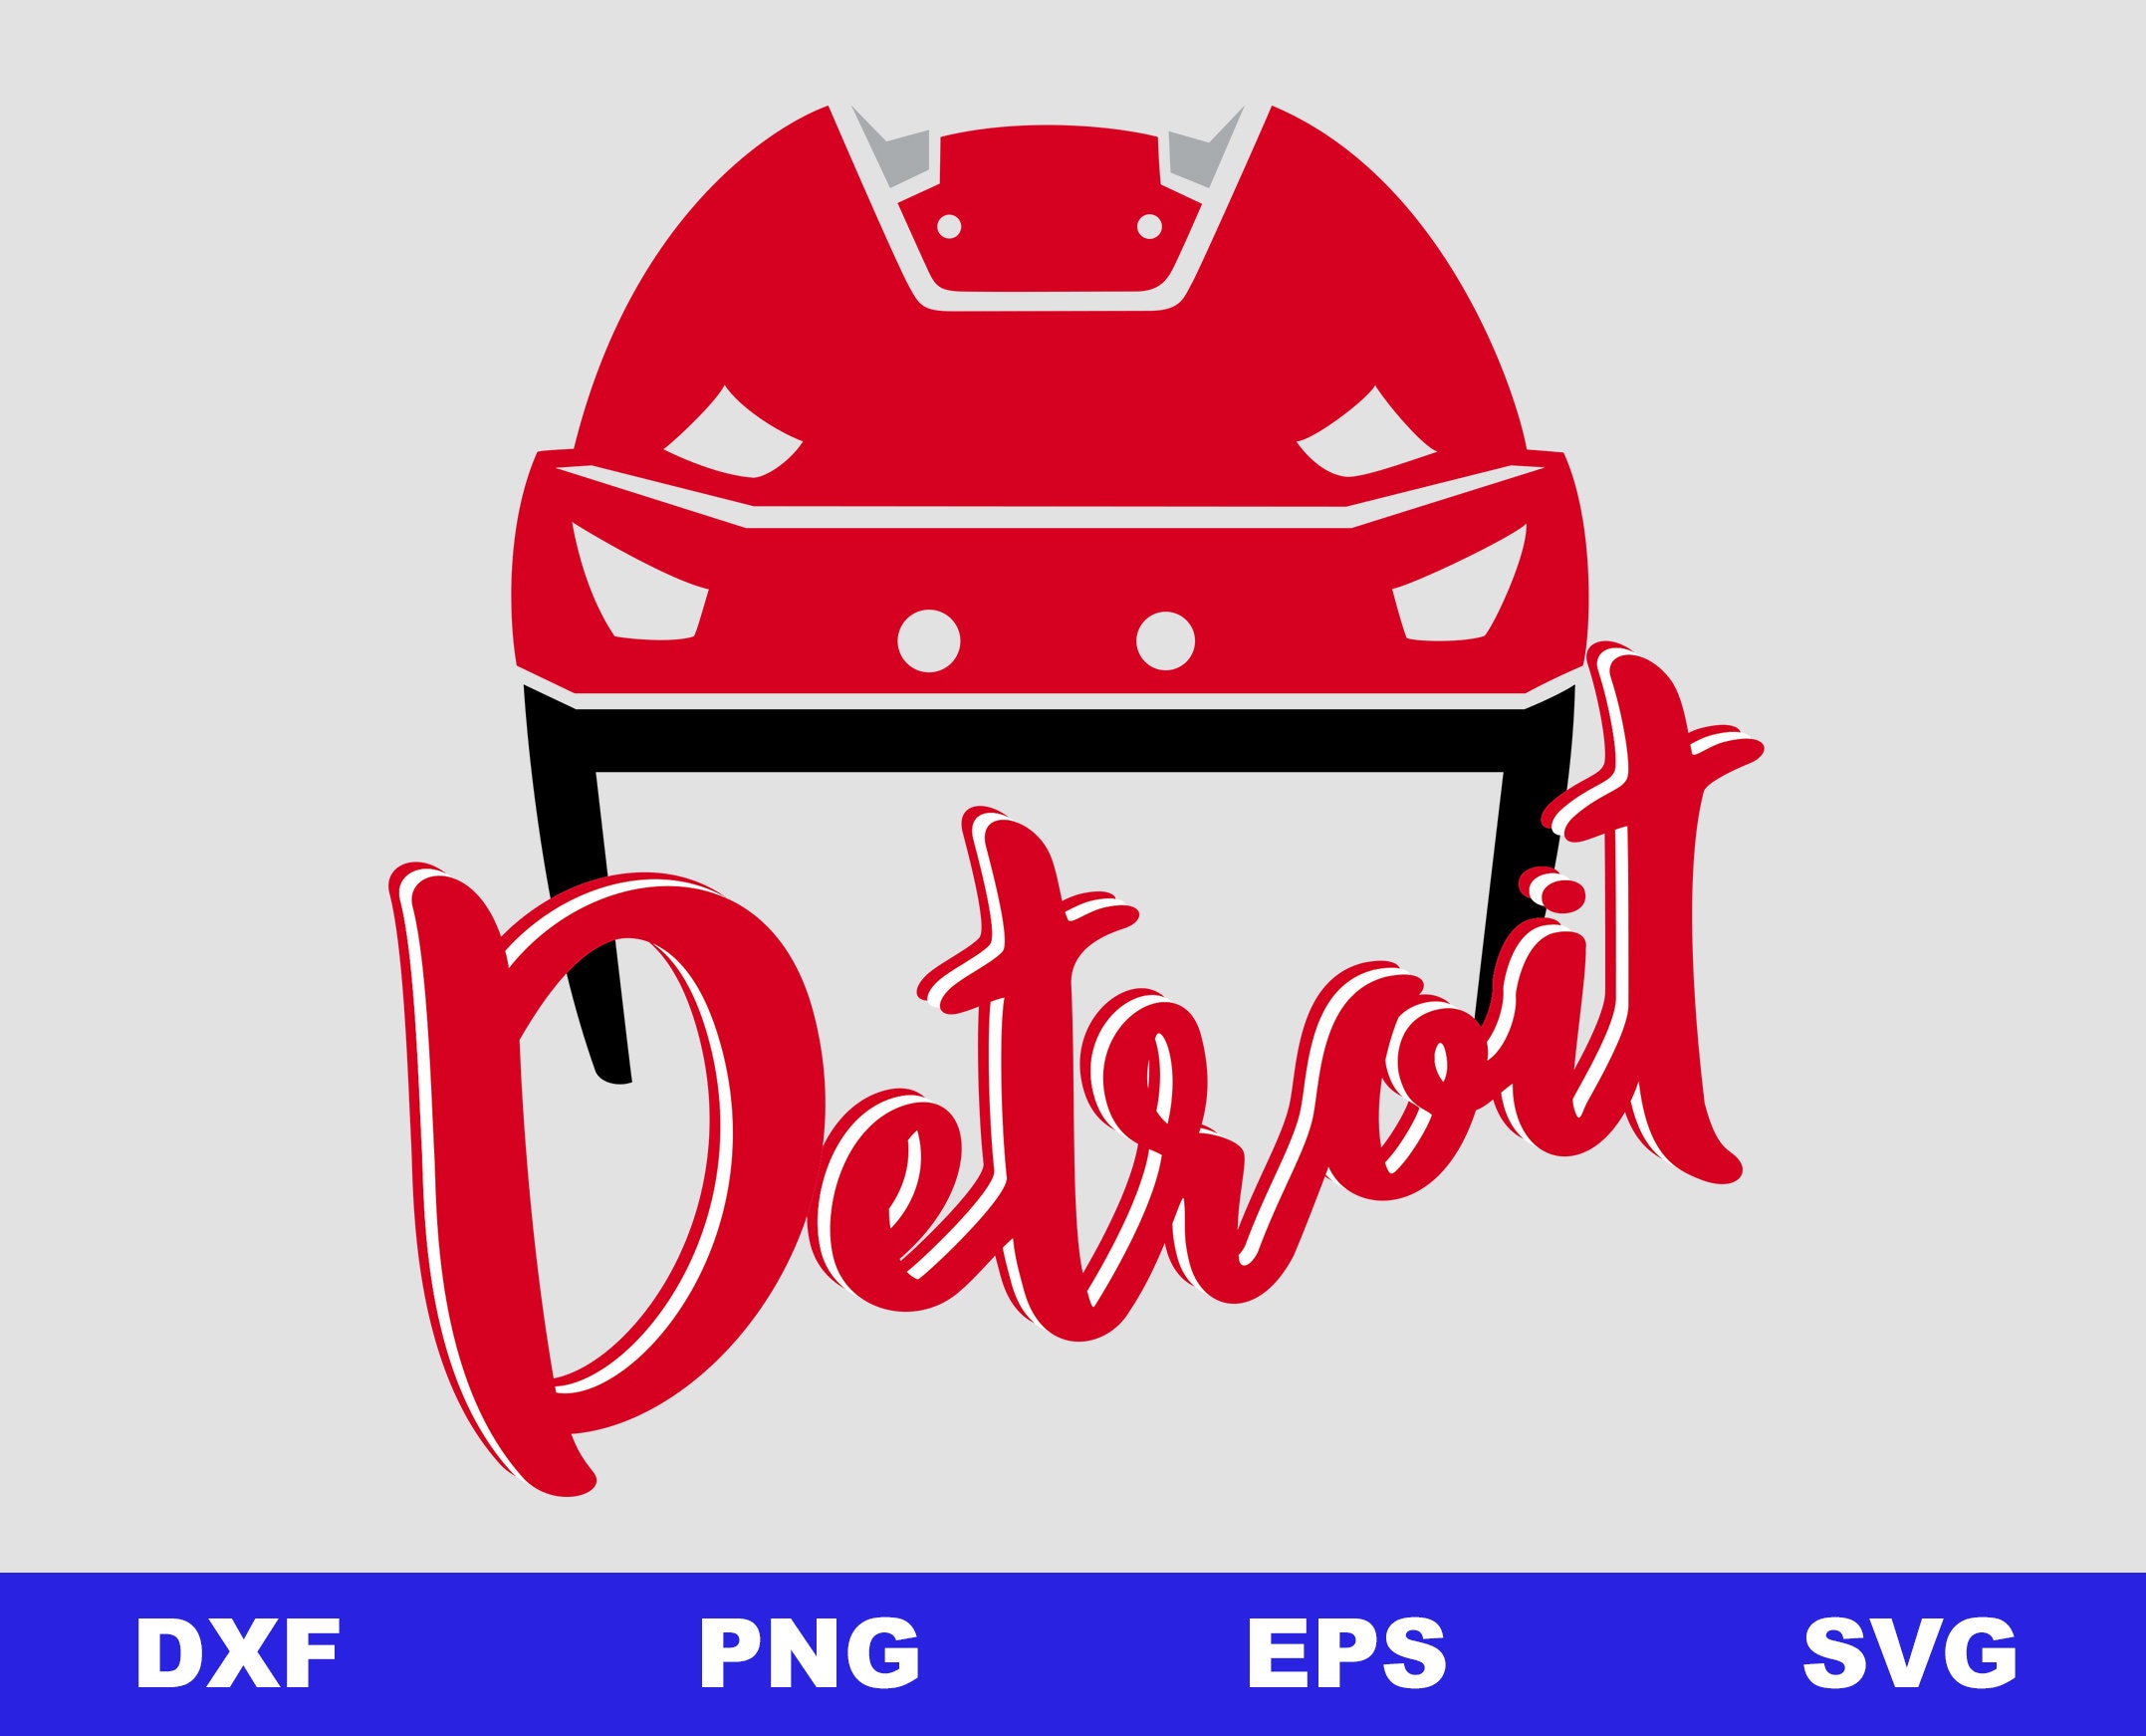 Detroit Red Wings Bundle Svg, Red Wings Svg,NHL svg, hockey cricut, Download